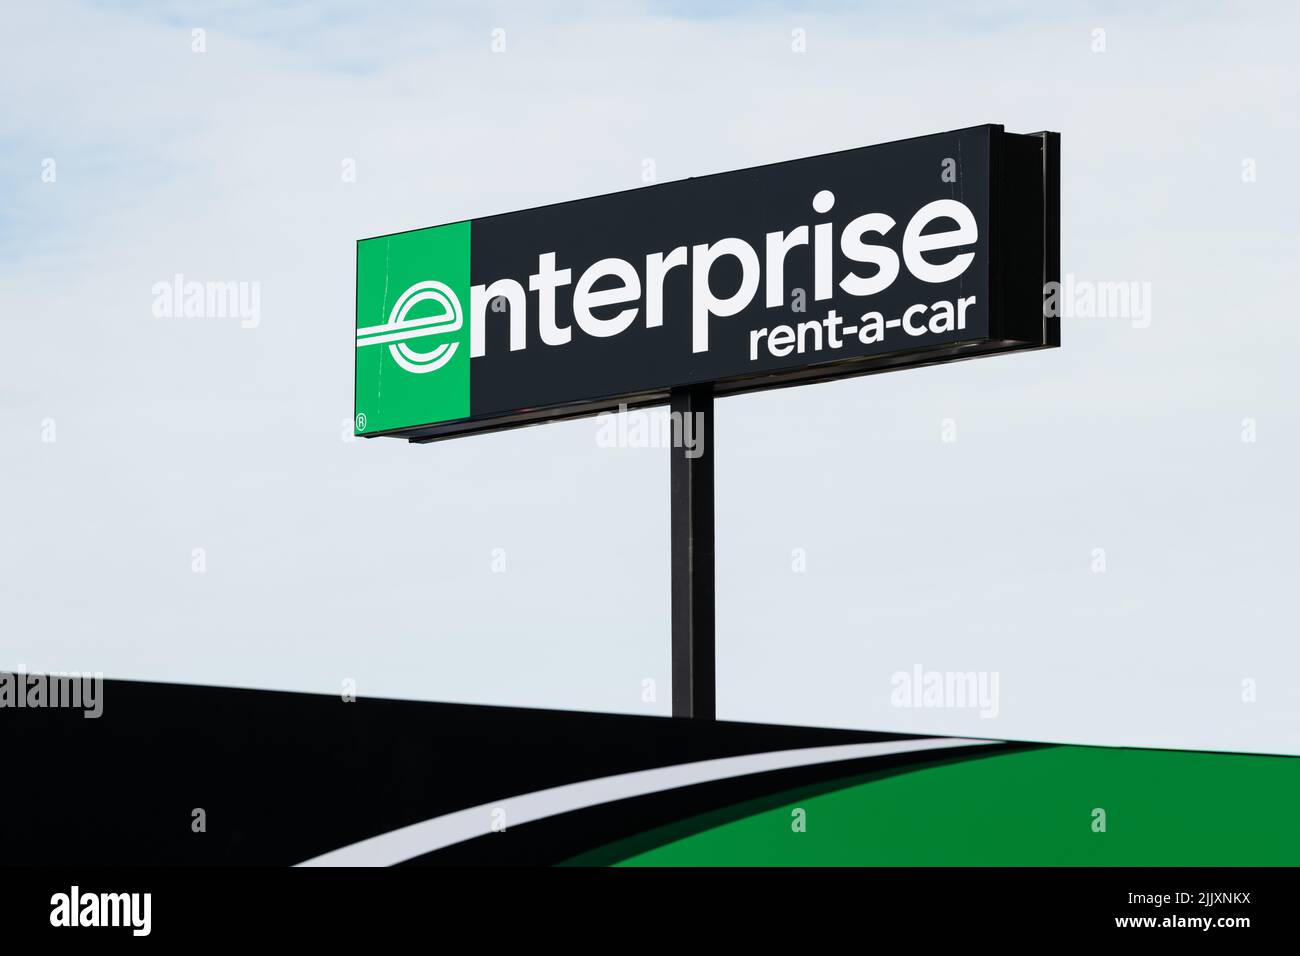 enterprise rent-a-car sign, Stirling, Scotland, UK Stock Photo